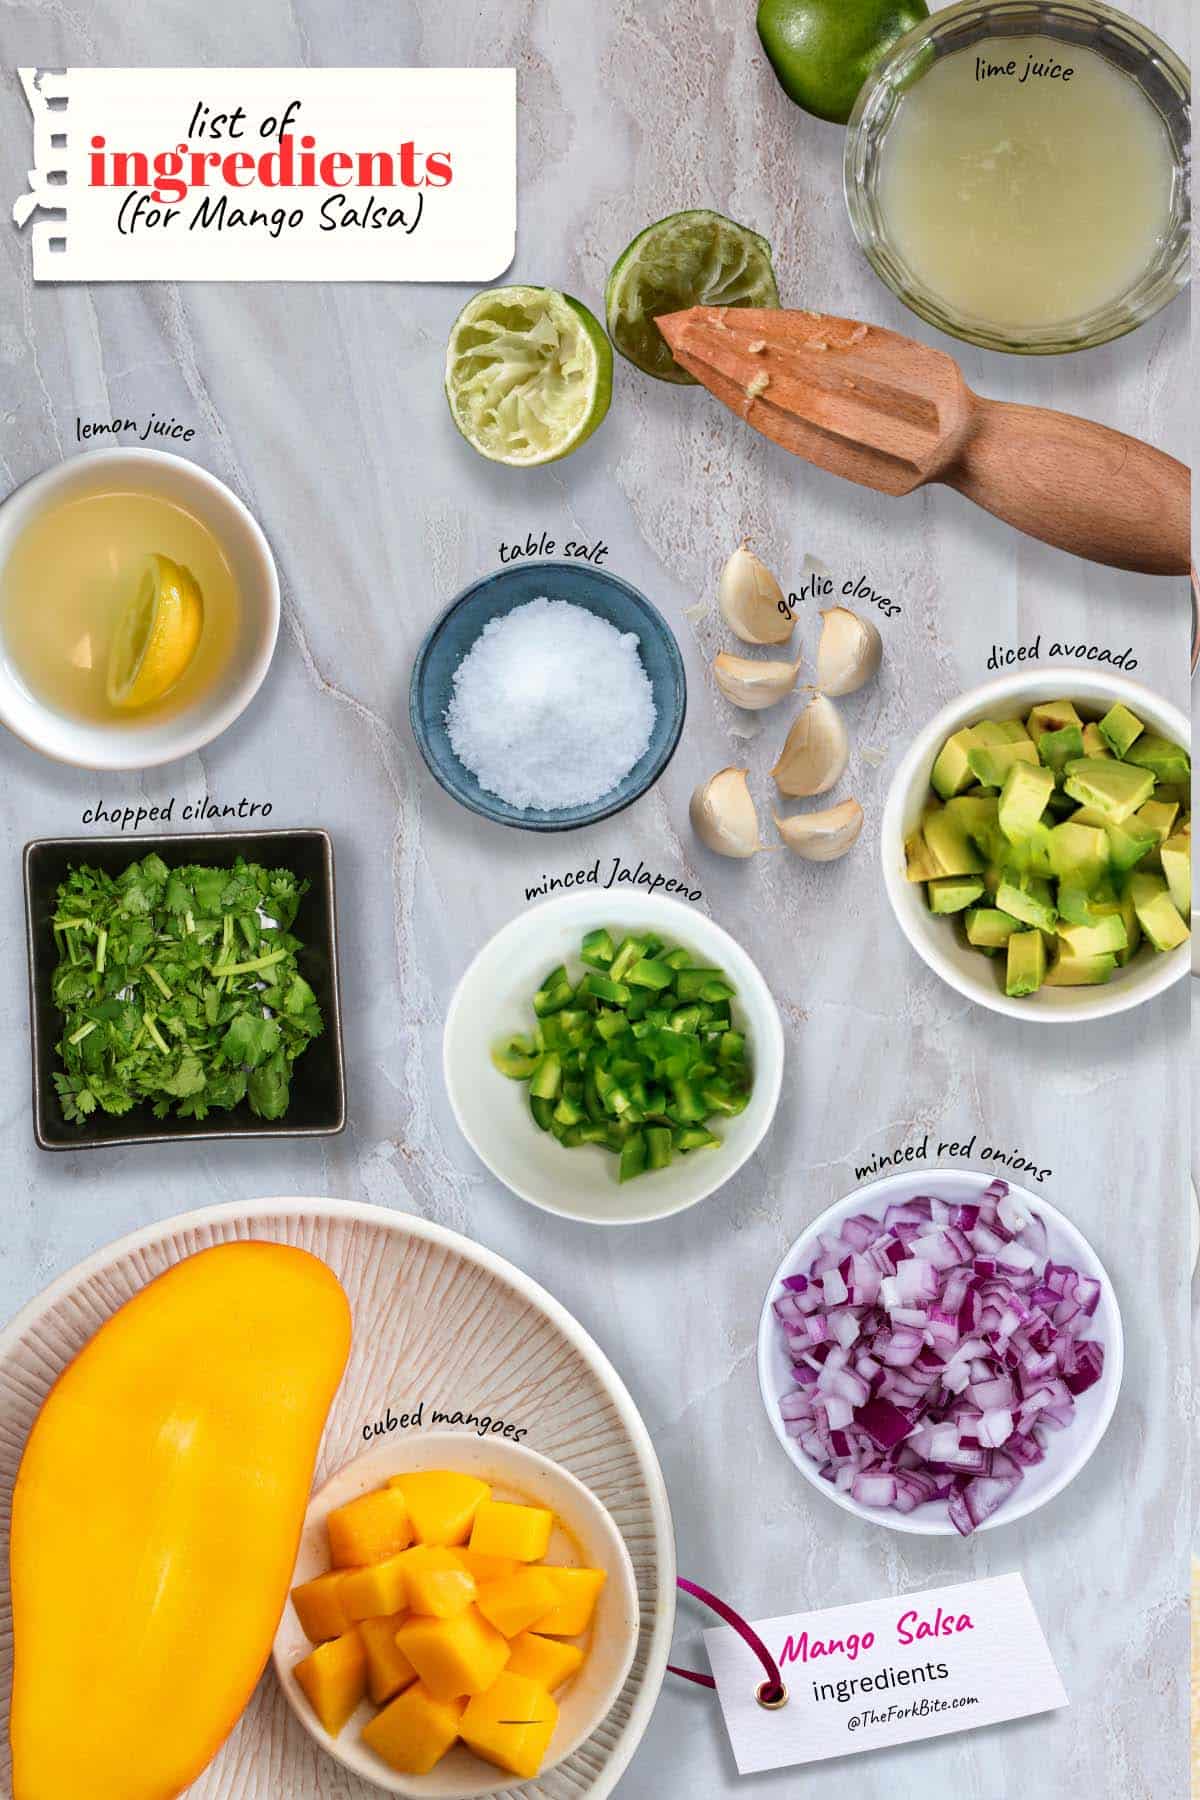 Diced mango, avocado, red onion, and cilantro ready to be mixed into a fresh salsa.